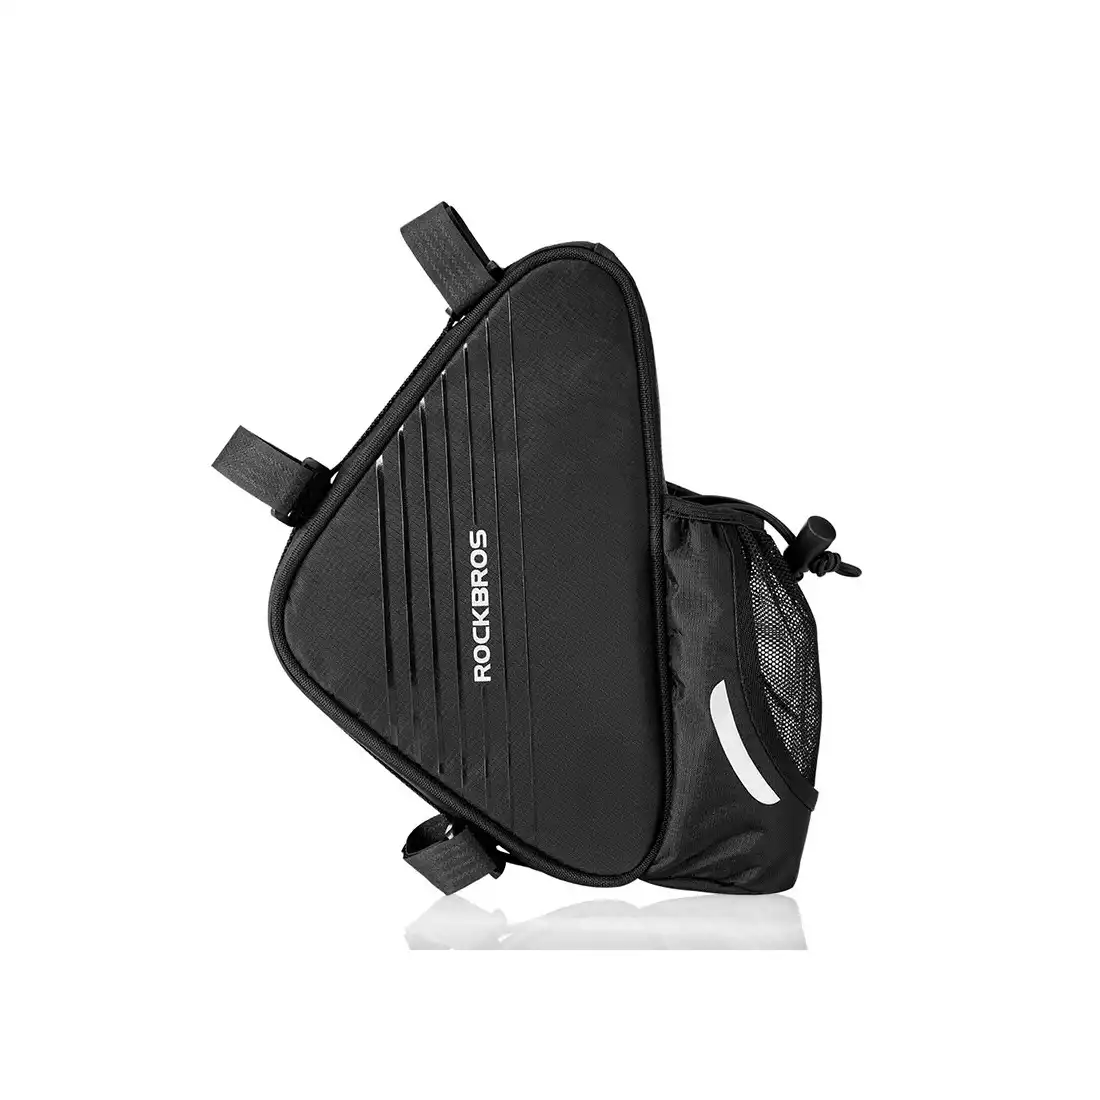 Rockbros Triangular frame bag, black B54-BK